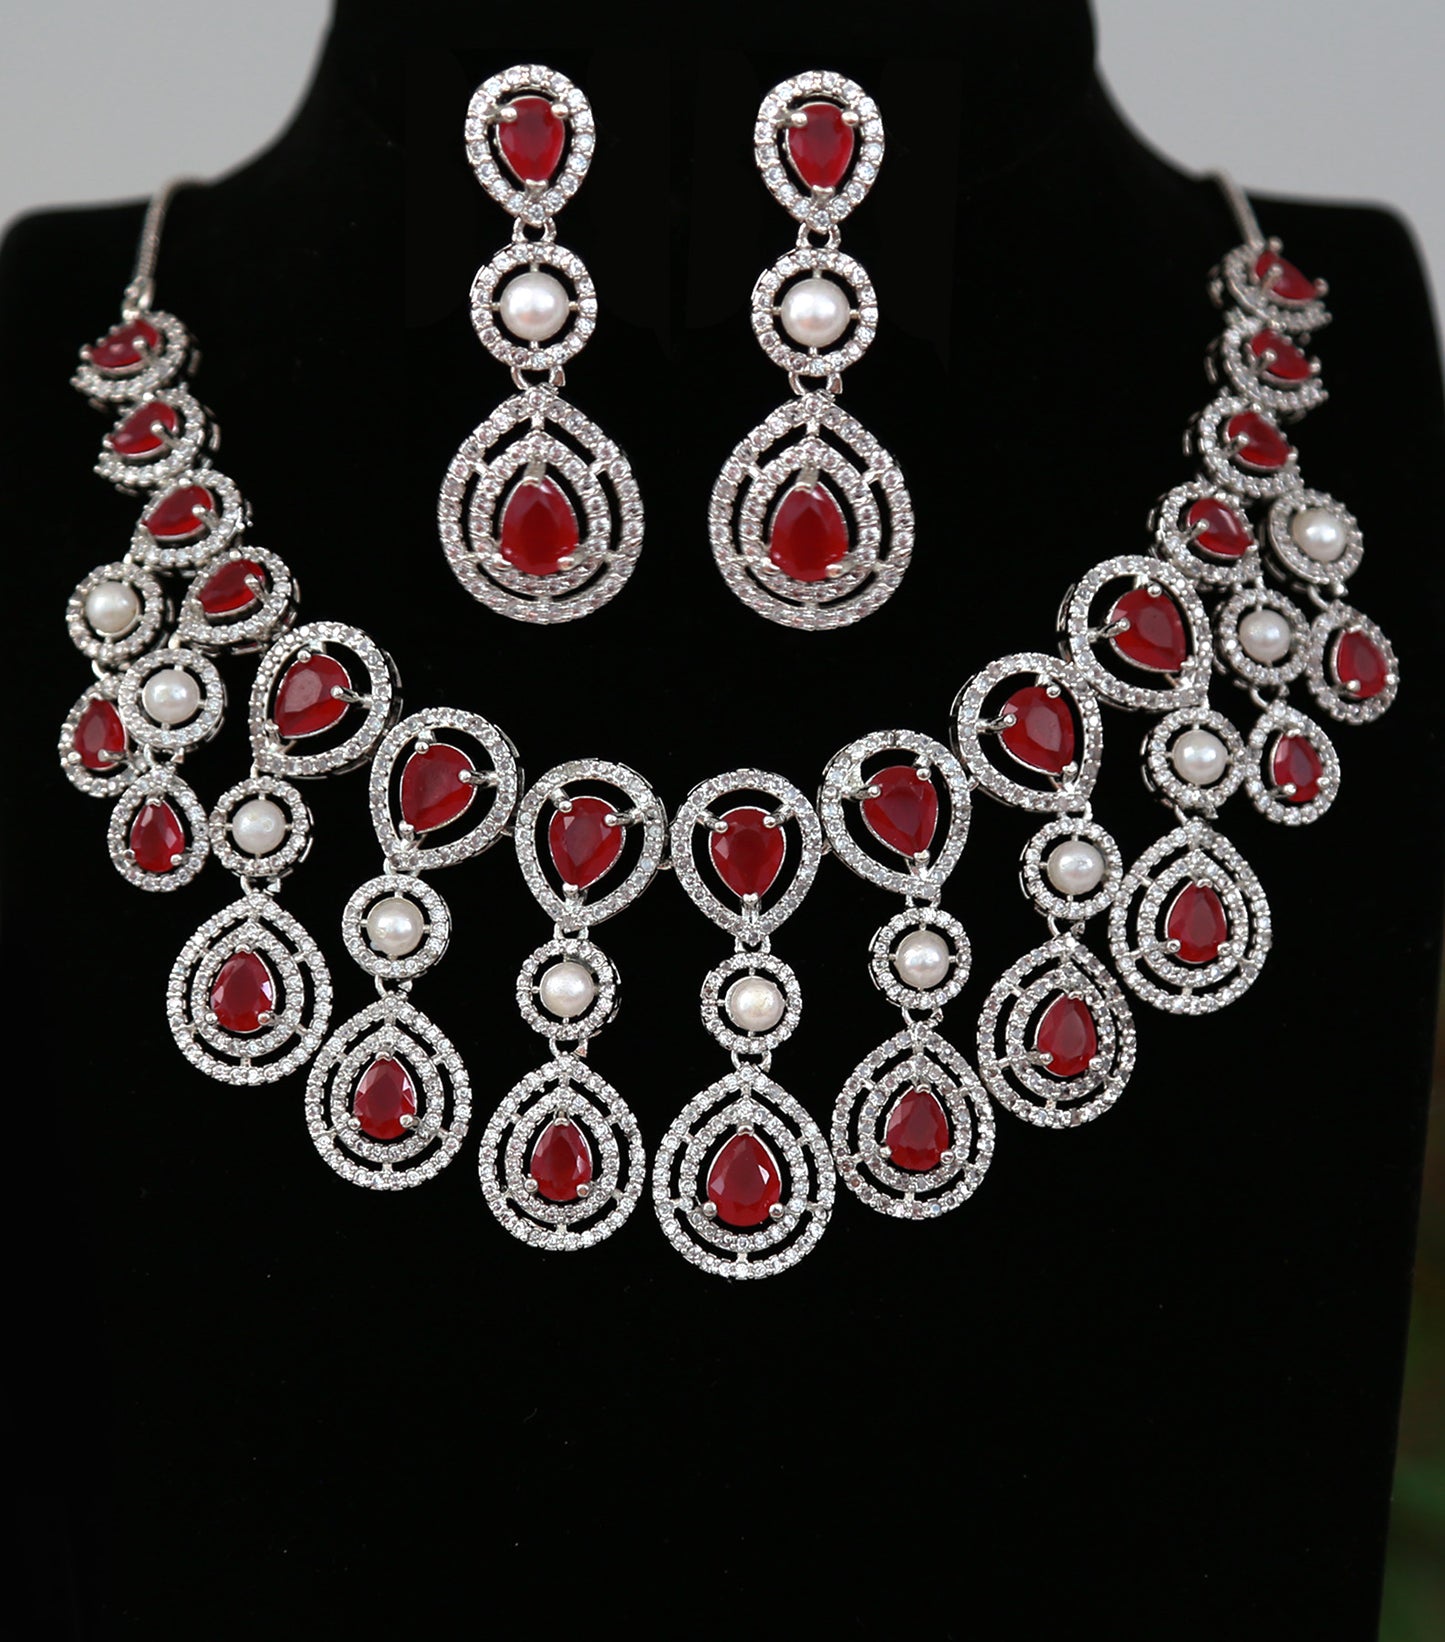 American Diamond Silver necklace with Tear-Drop CZ Blue stone| Indian wedding Jewelry|Pakistani jewelry| Bollywood style Bridal Necklace